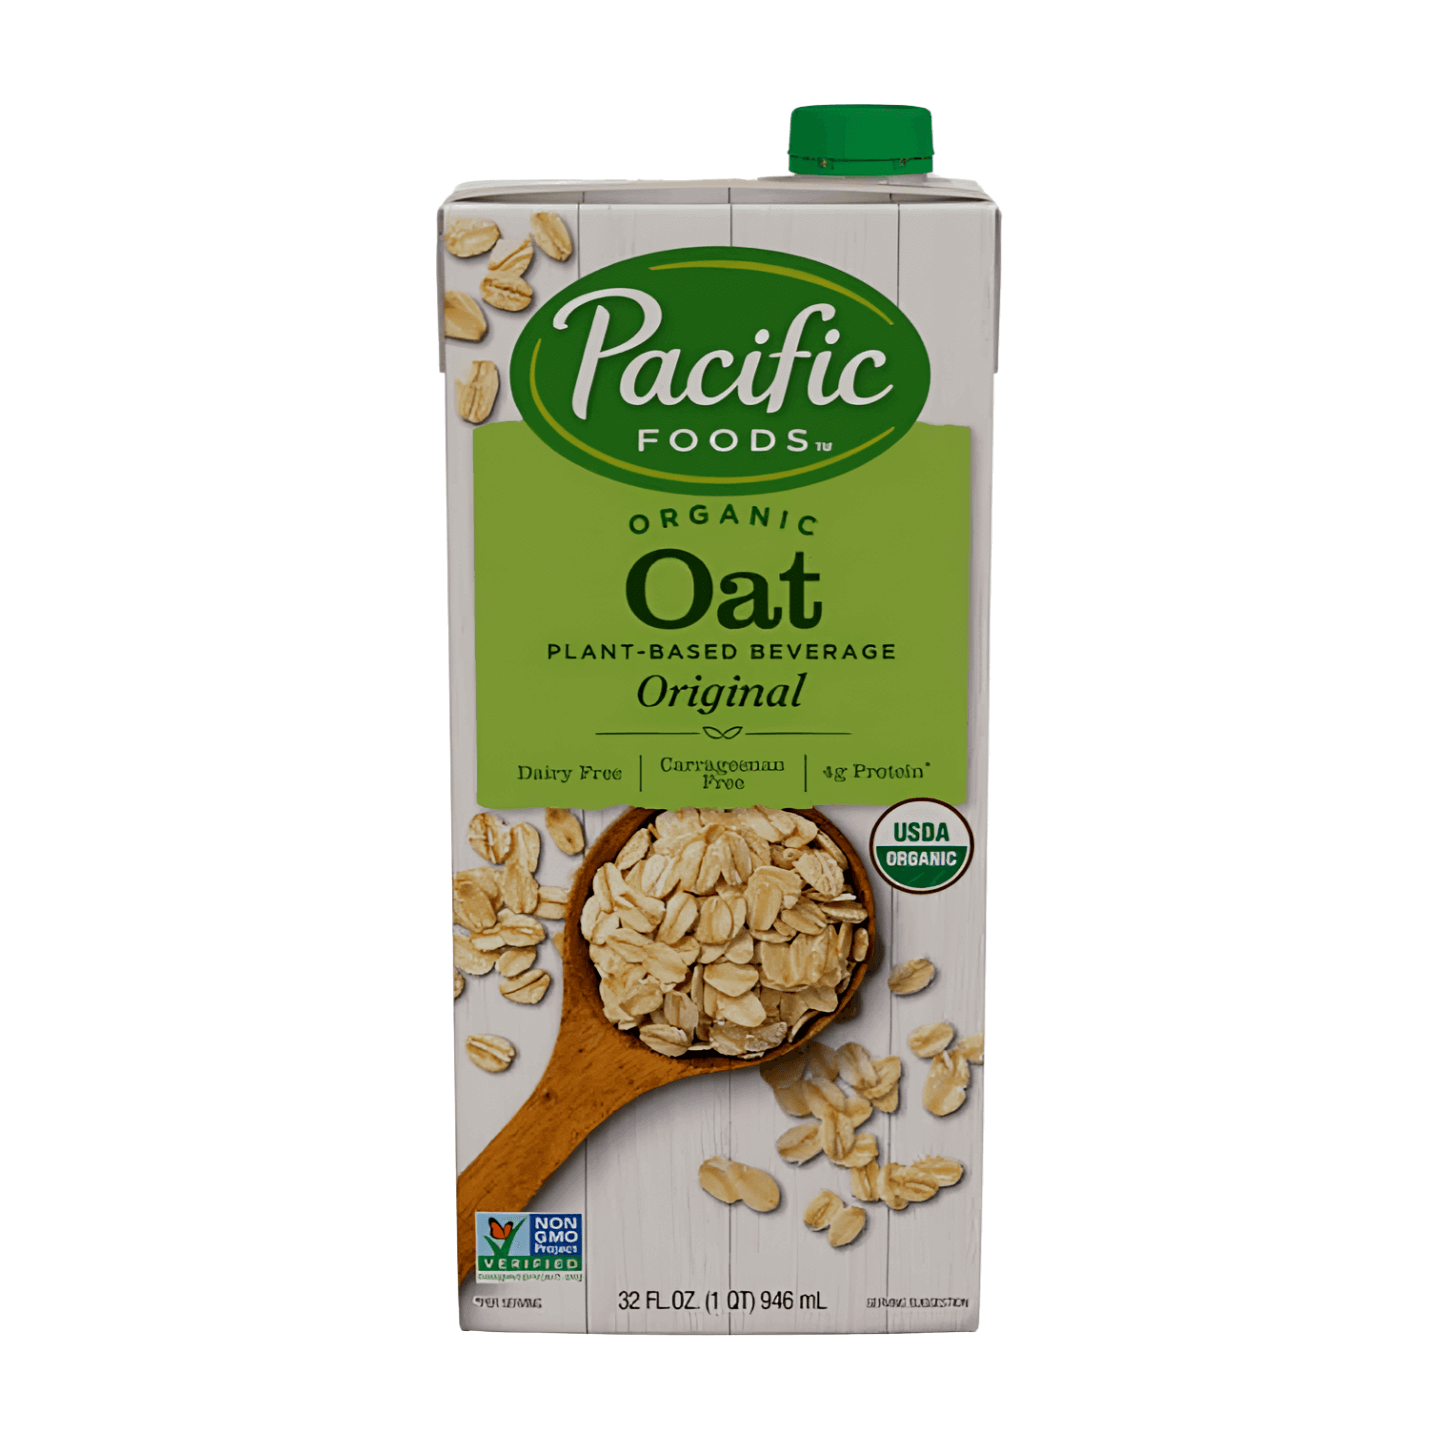 Pacific Foods Organic Oat Original Beverage